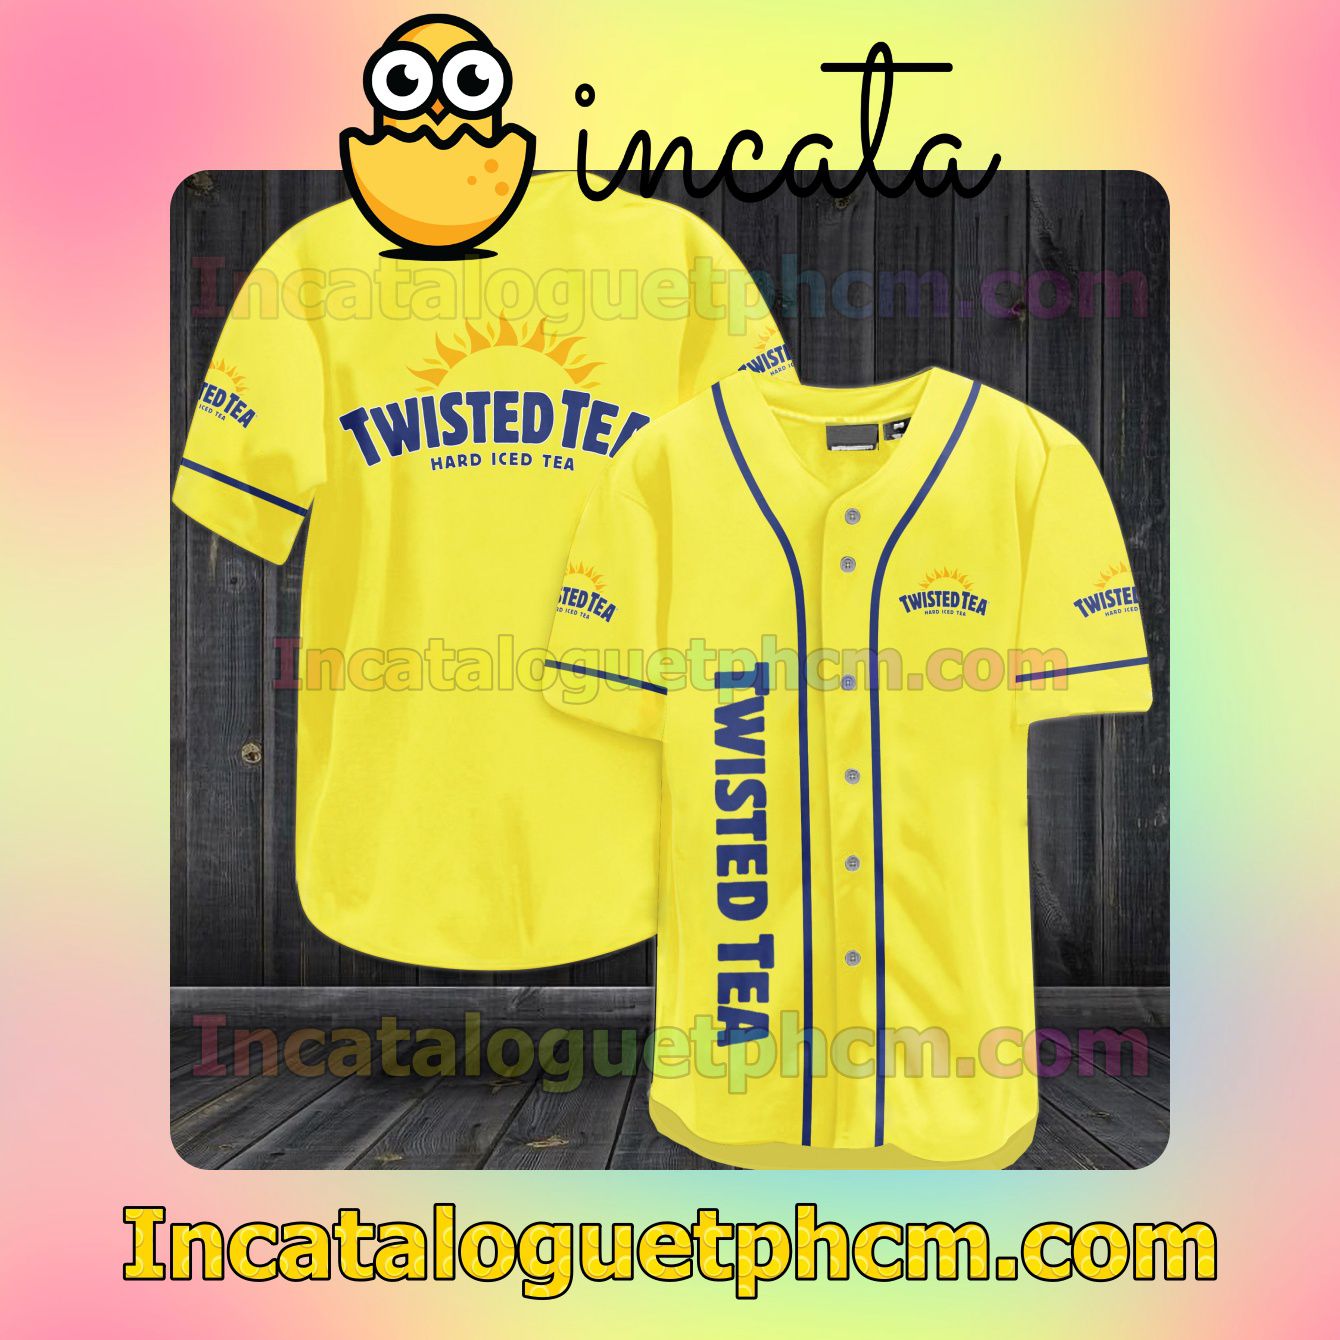 Twisted Tea Hard Iced Tea Baseball Jersey Shirt